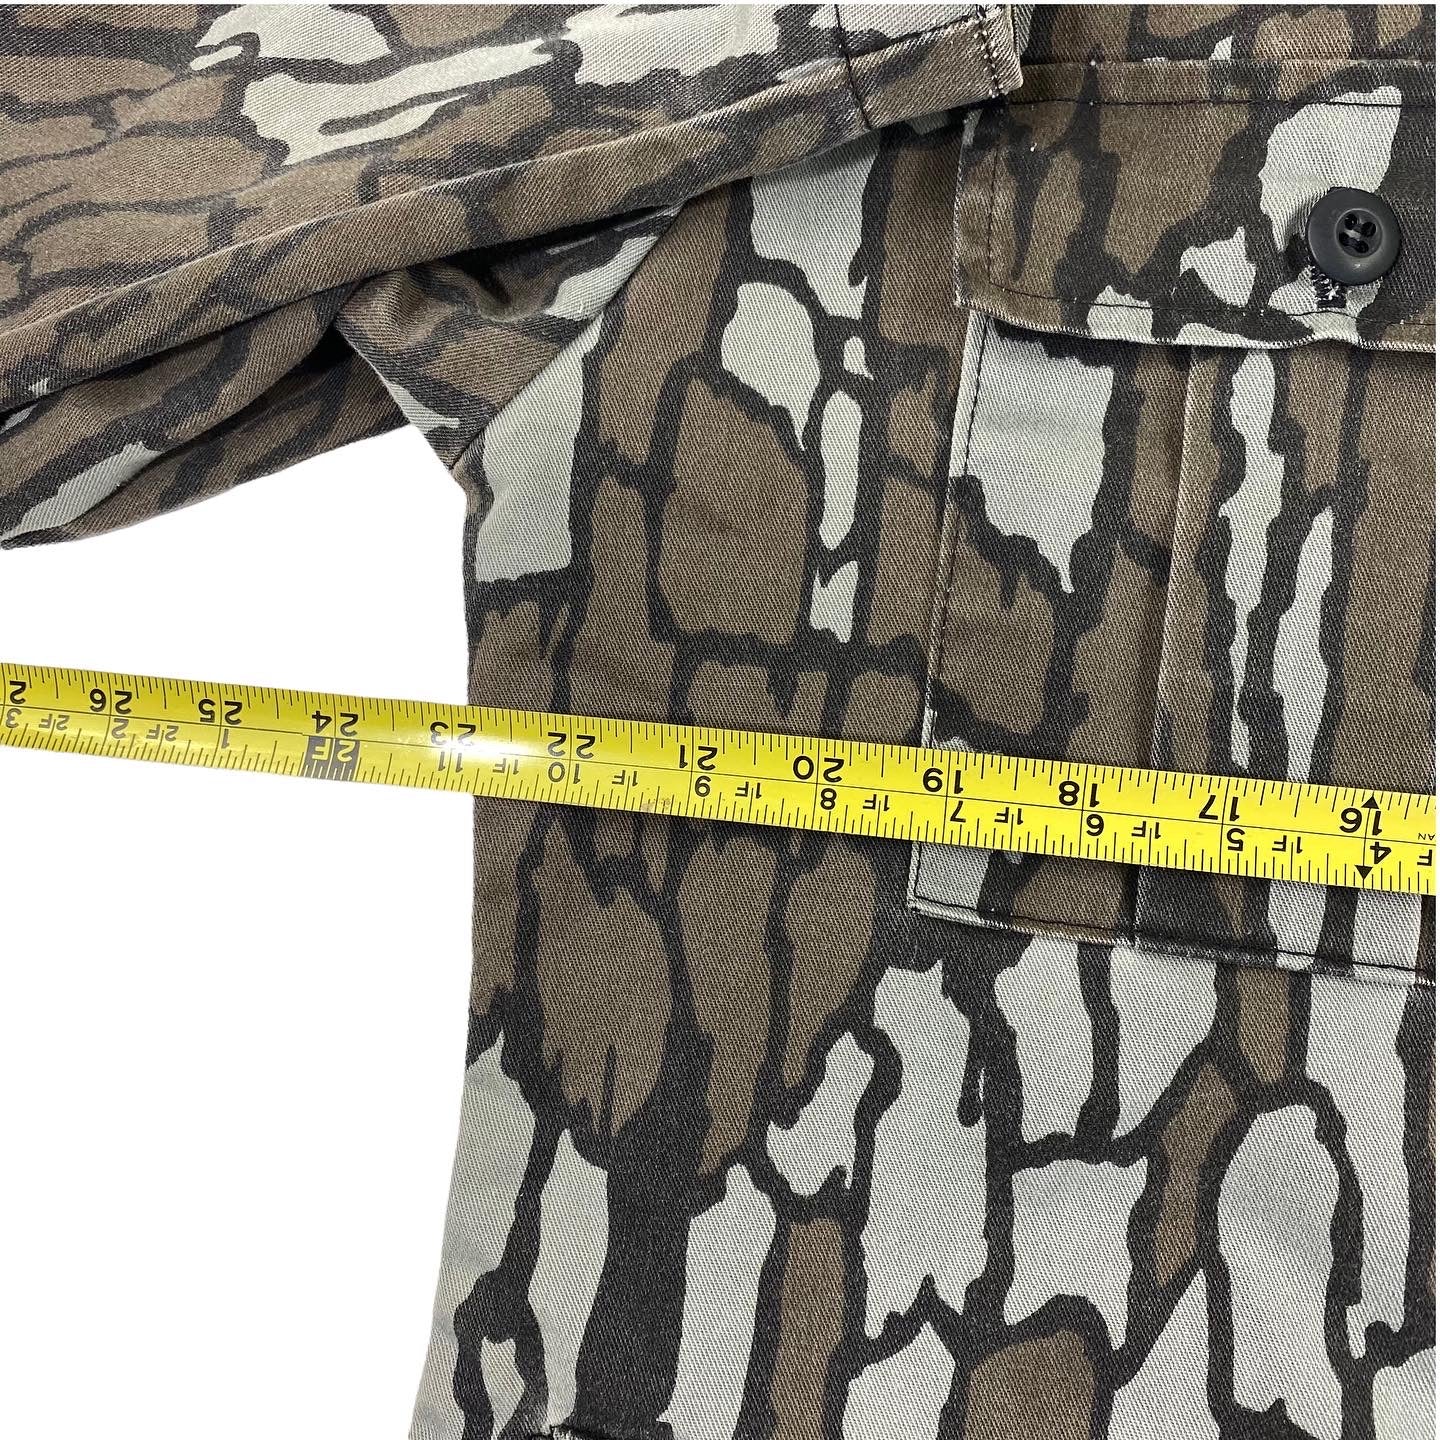 Bark Camo cotton jacket and pants. XL top 32 waist